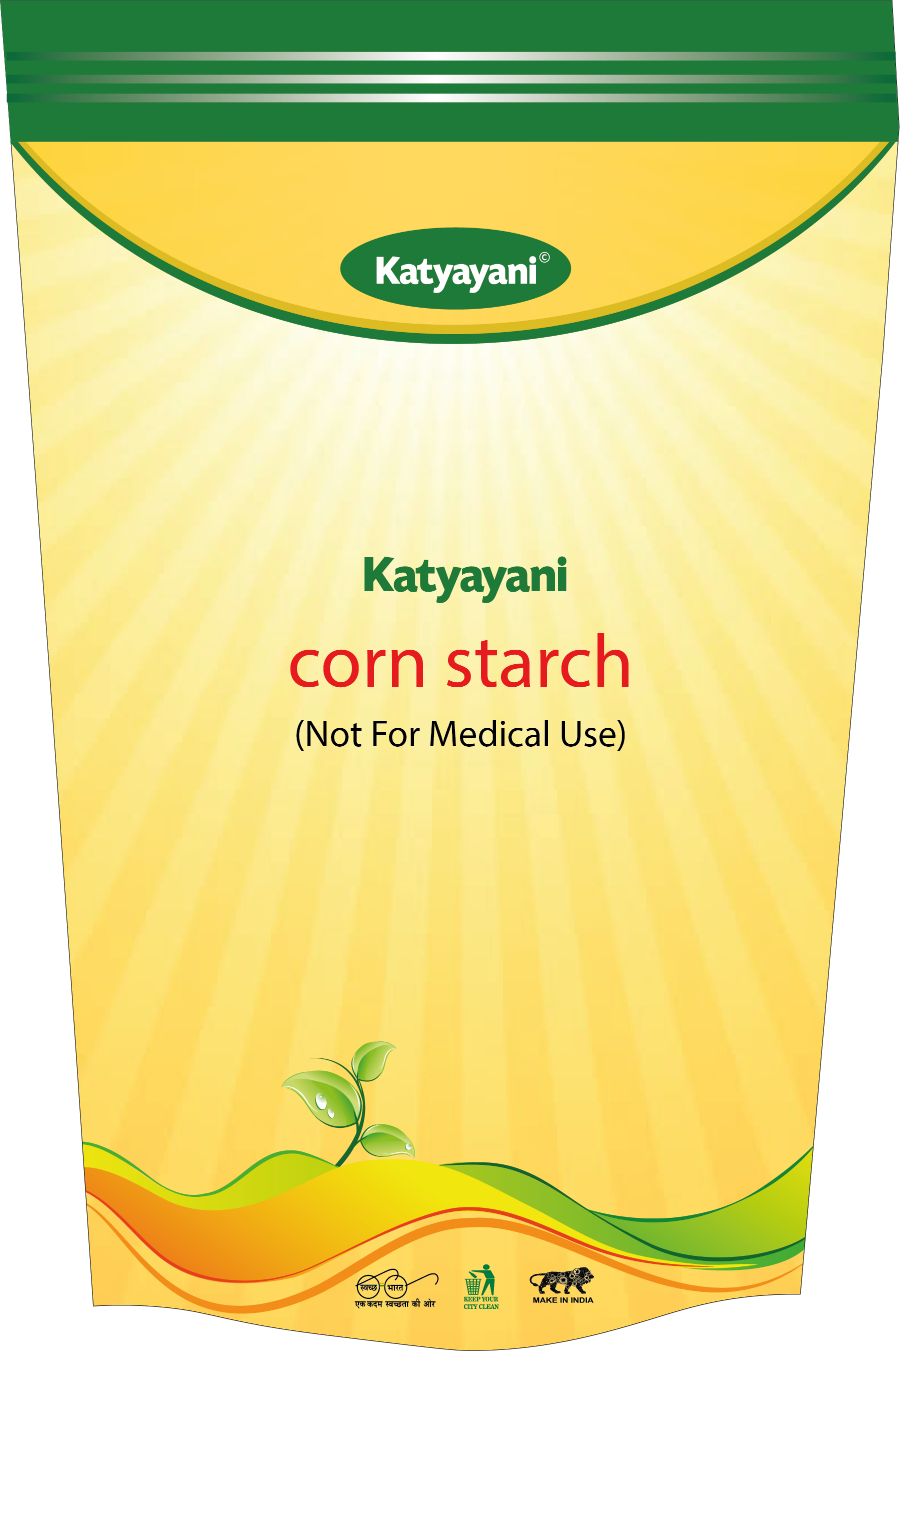  Corn Starch